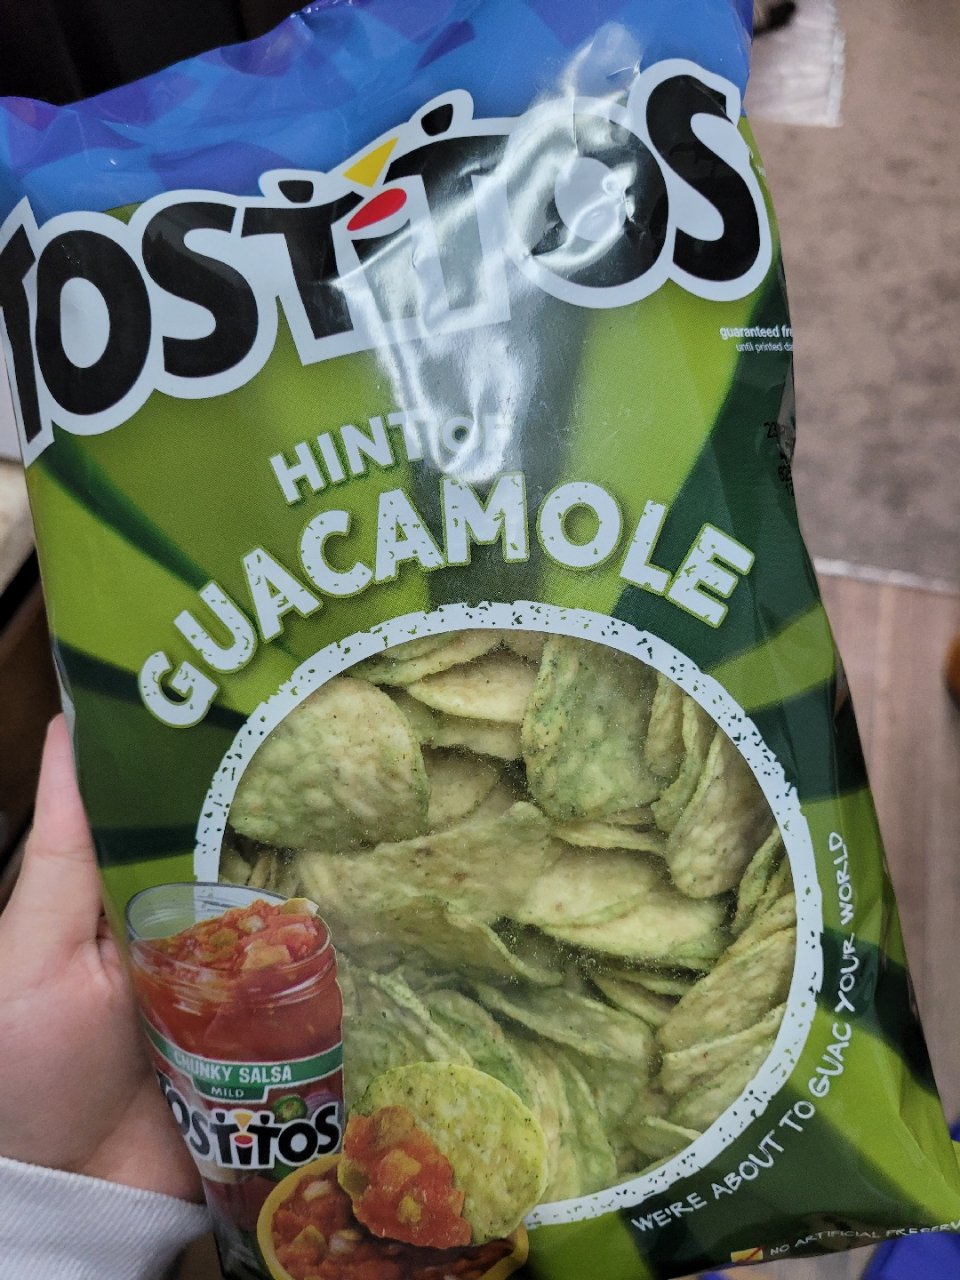 Tostitos Hint of Guacamole Flavored Bite Size Rounds Tortilla Chips, 12 oz Bag - Walmart.com - Walmart.com